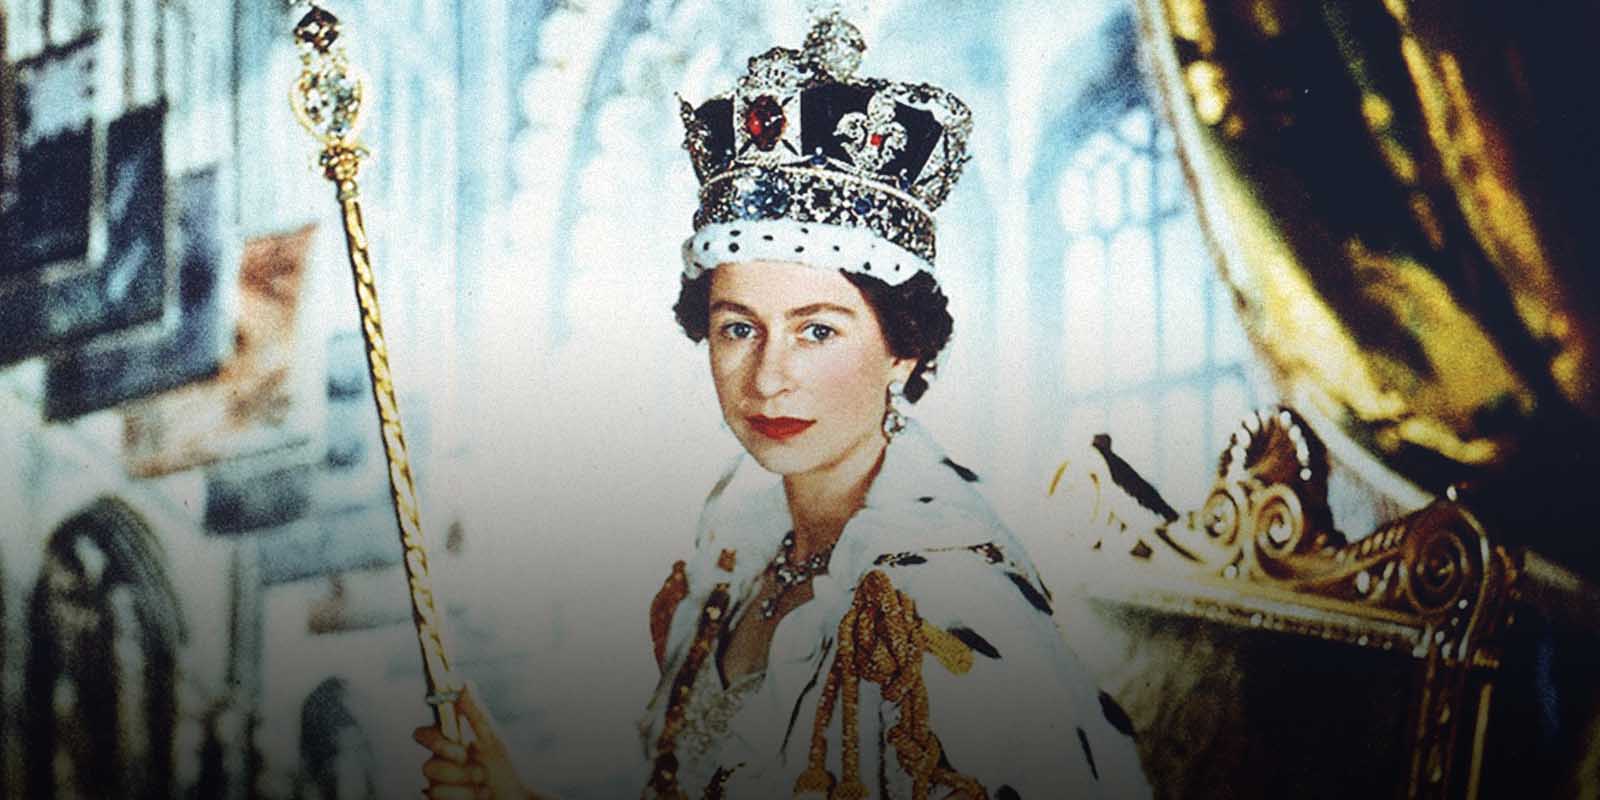 Who was Queen Elizabeth II?